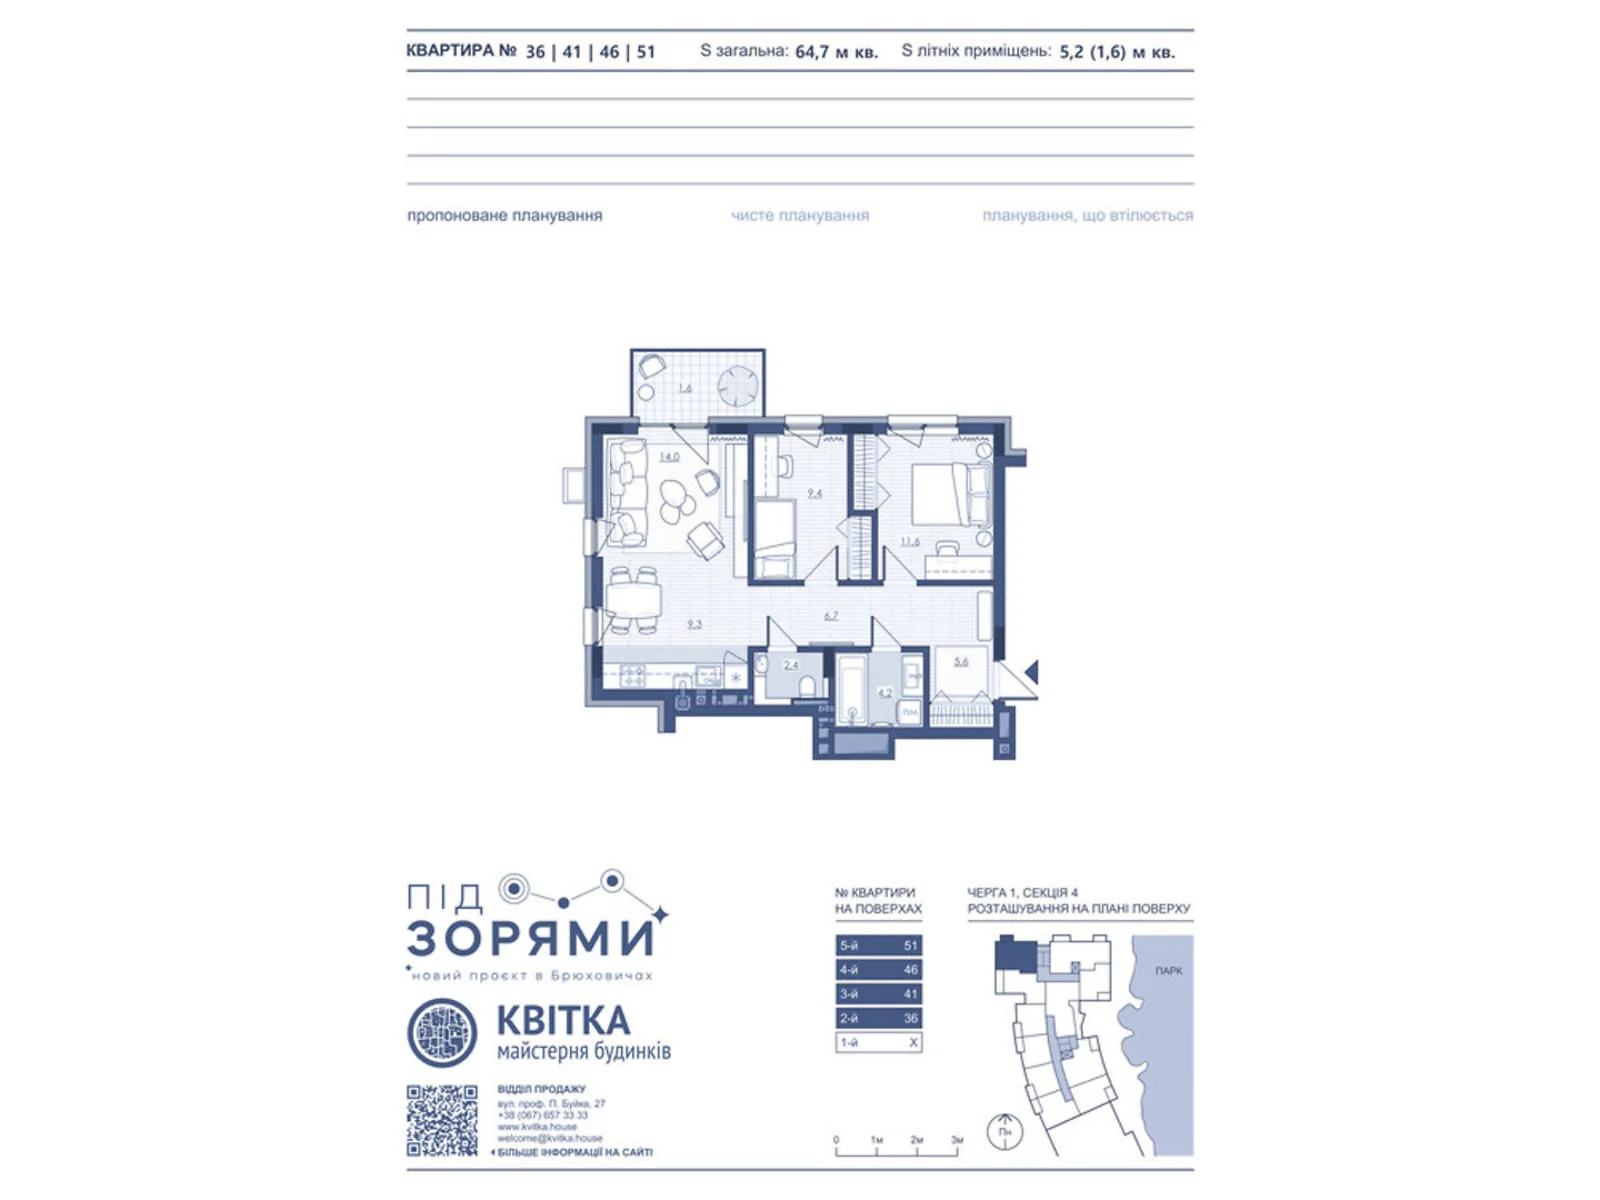 Продается 2-комнатная квартира 64.7 кв. м в Брюховичах, цена: 64053 $ - фото 1